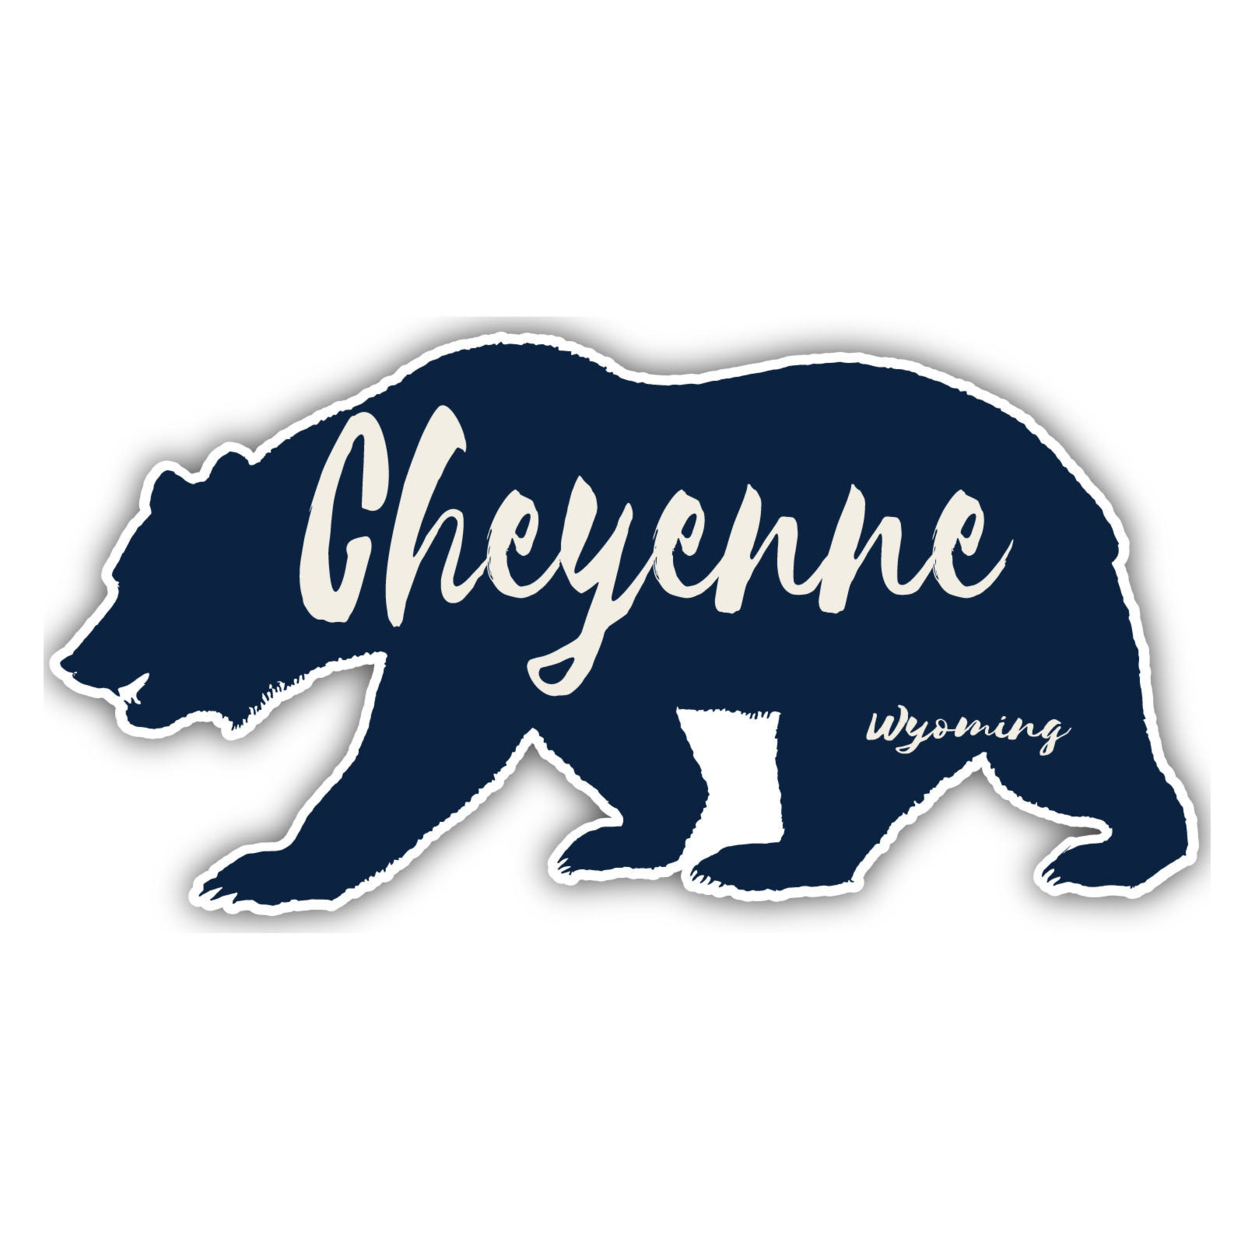 Cheyenne Wyoming Souvenir Decorative Stickers (Choose Theme And Size) - Single Unit, 6-Inch, Bear